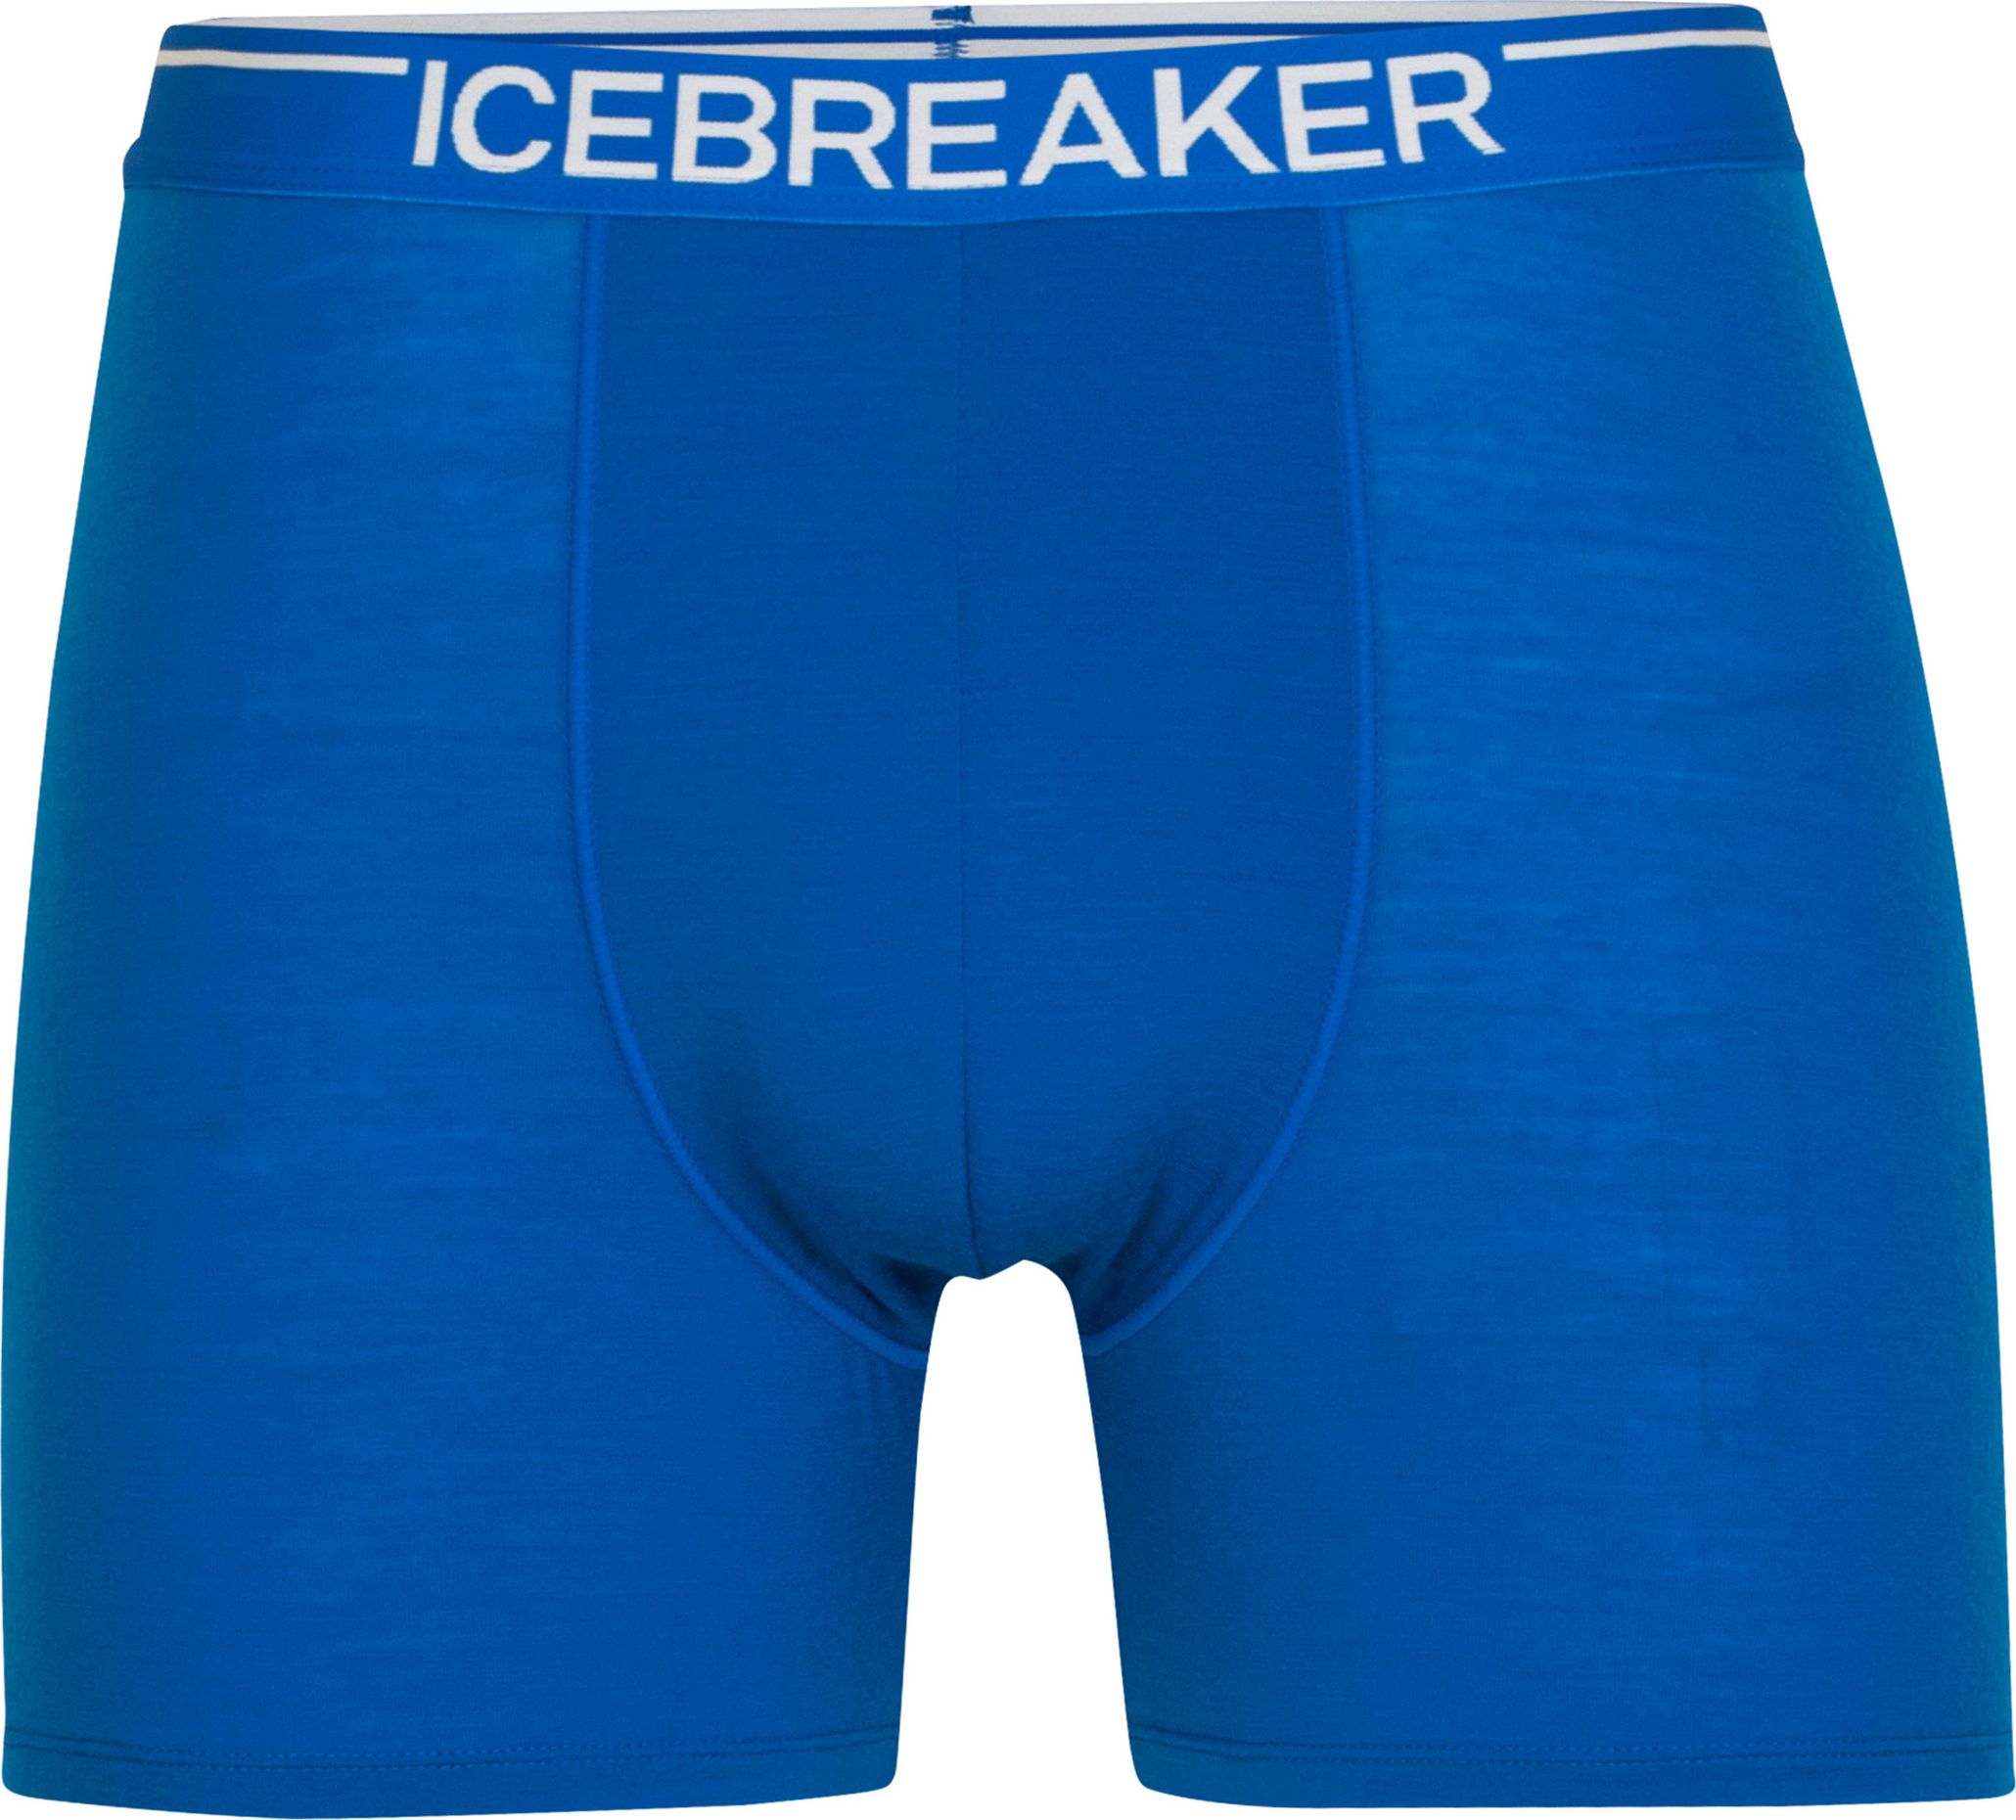 Icebreaker ICEBREAKER, Anatomica Boxers- Mens